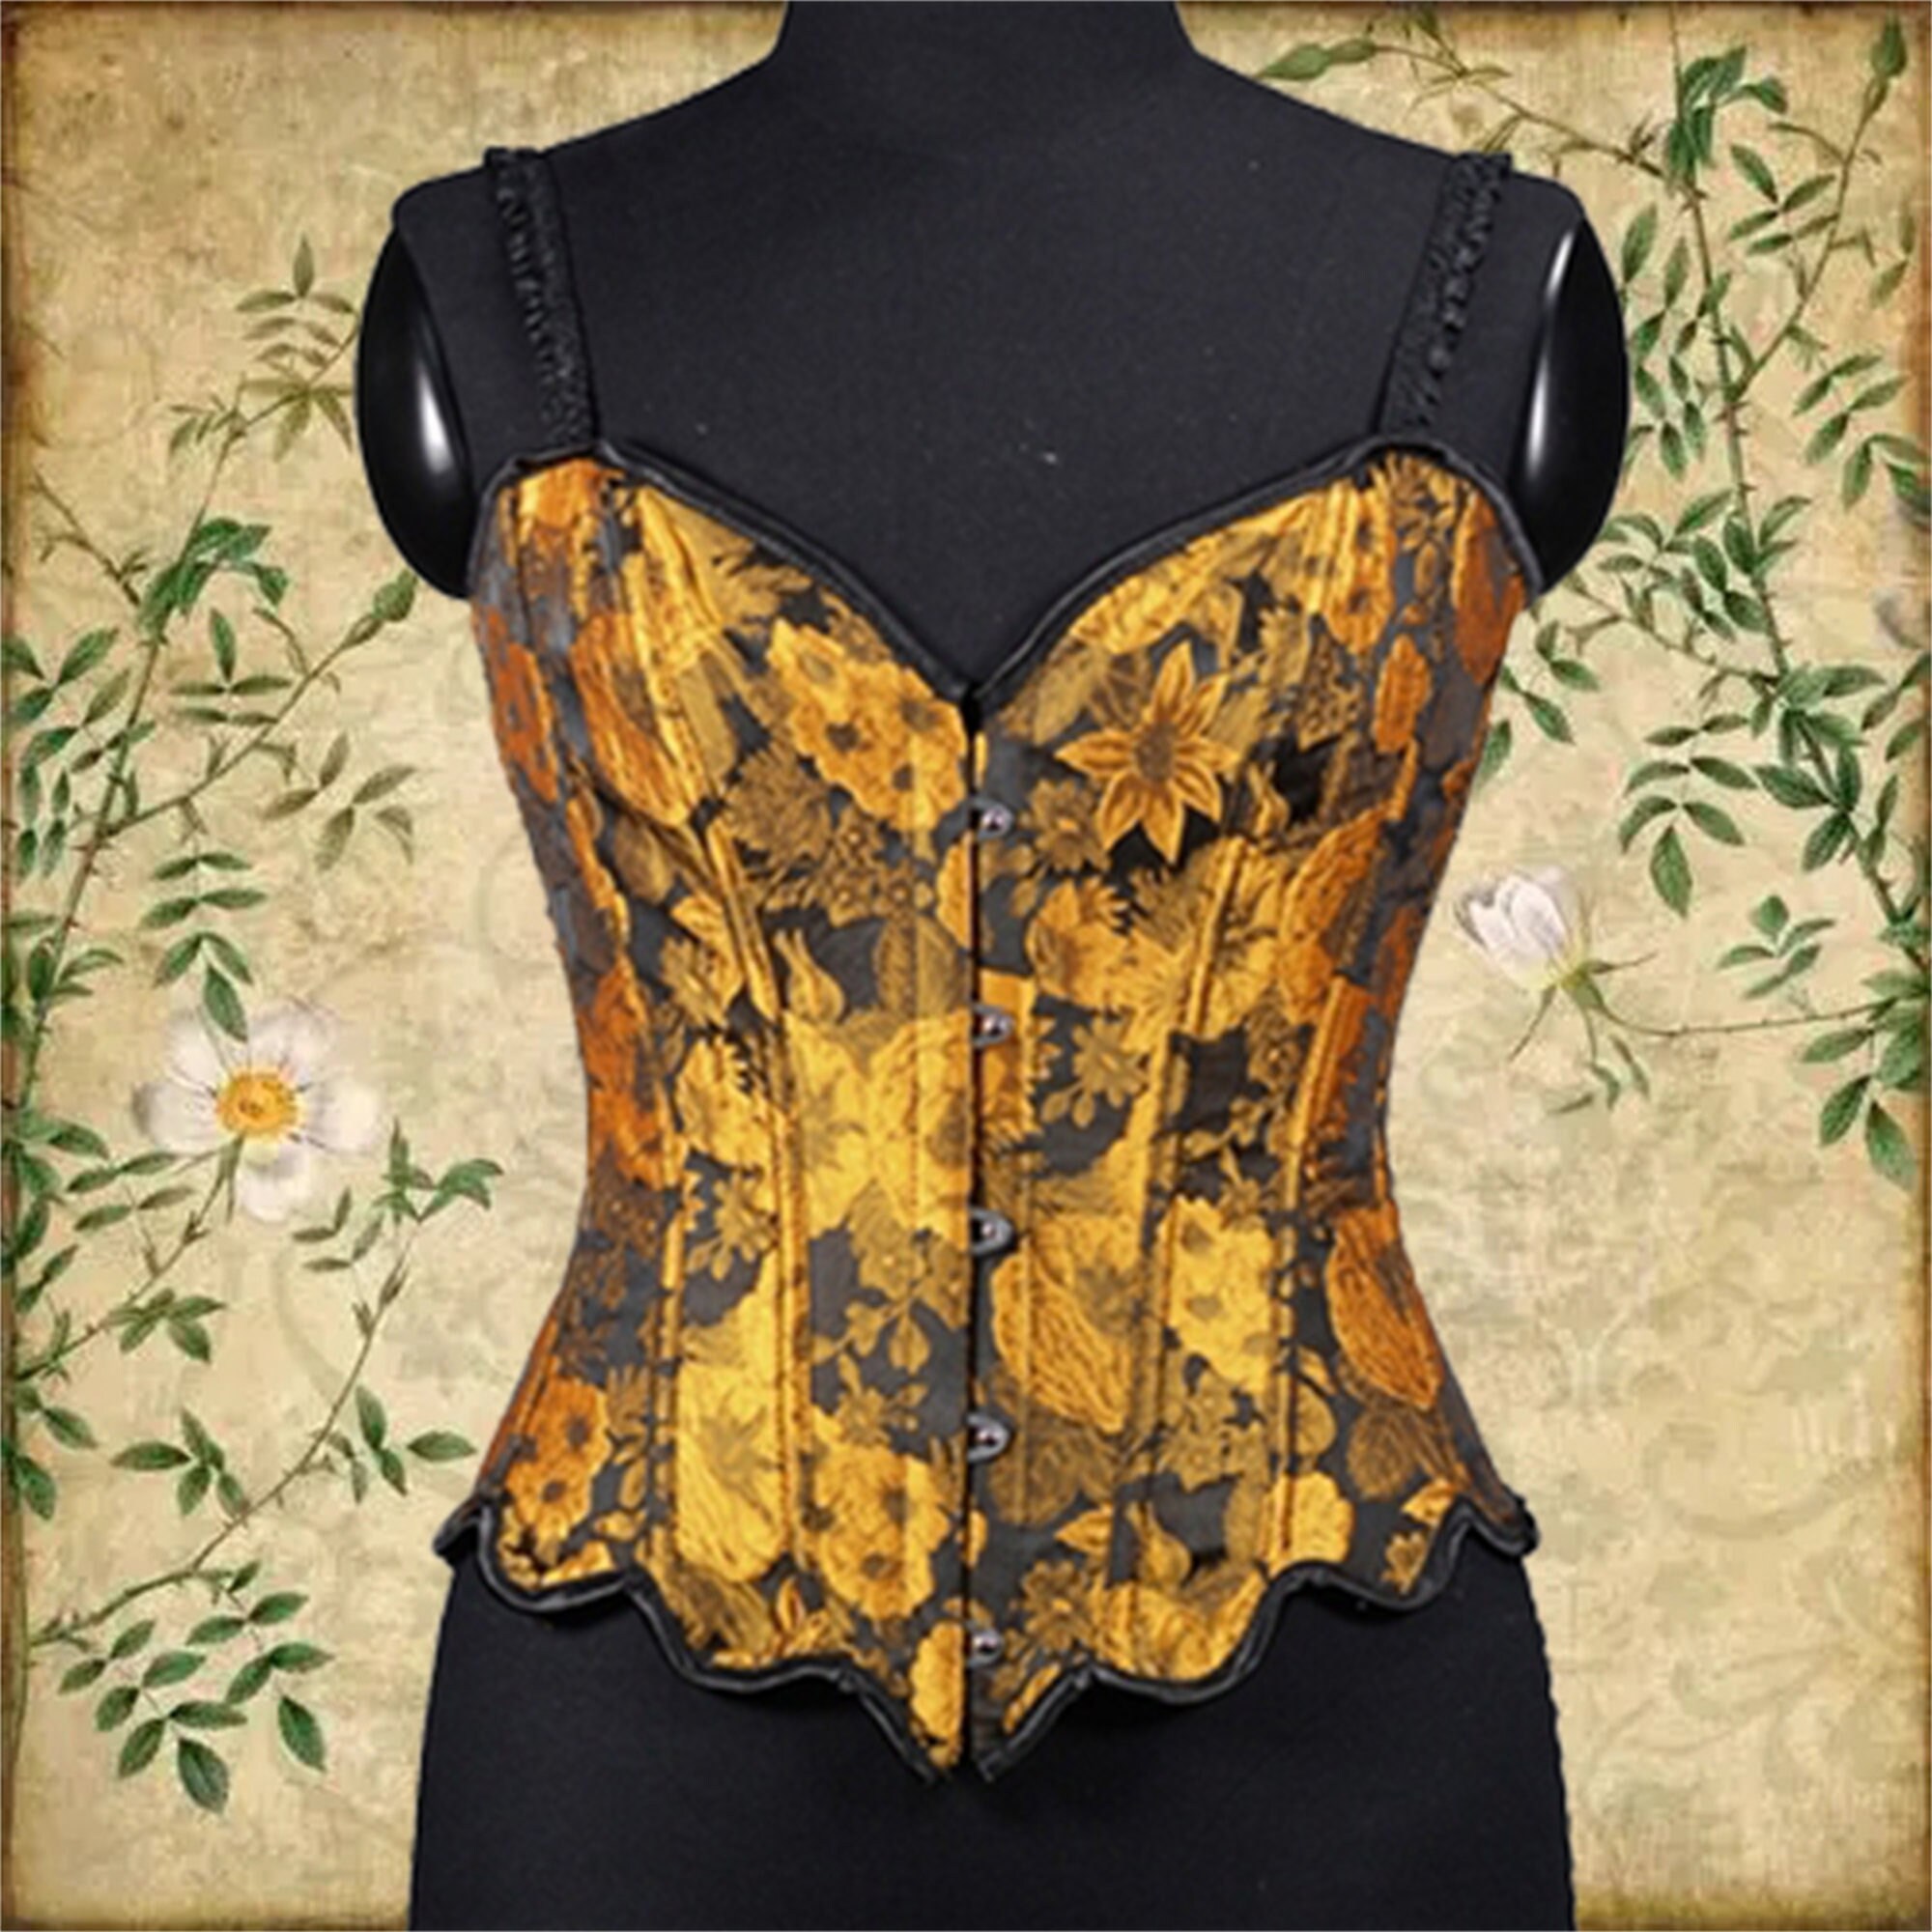 Renaissance overbust corset and shirt